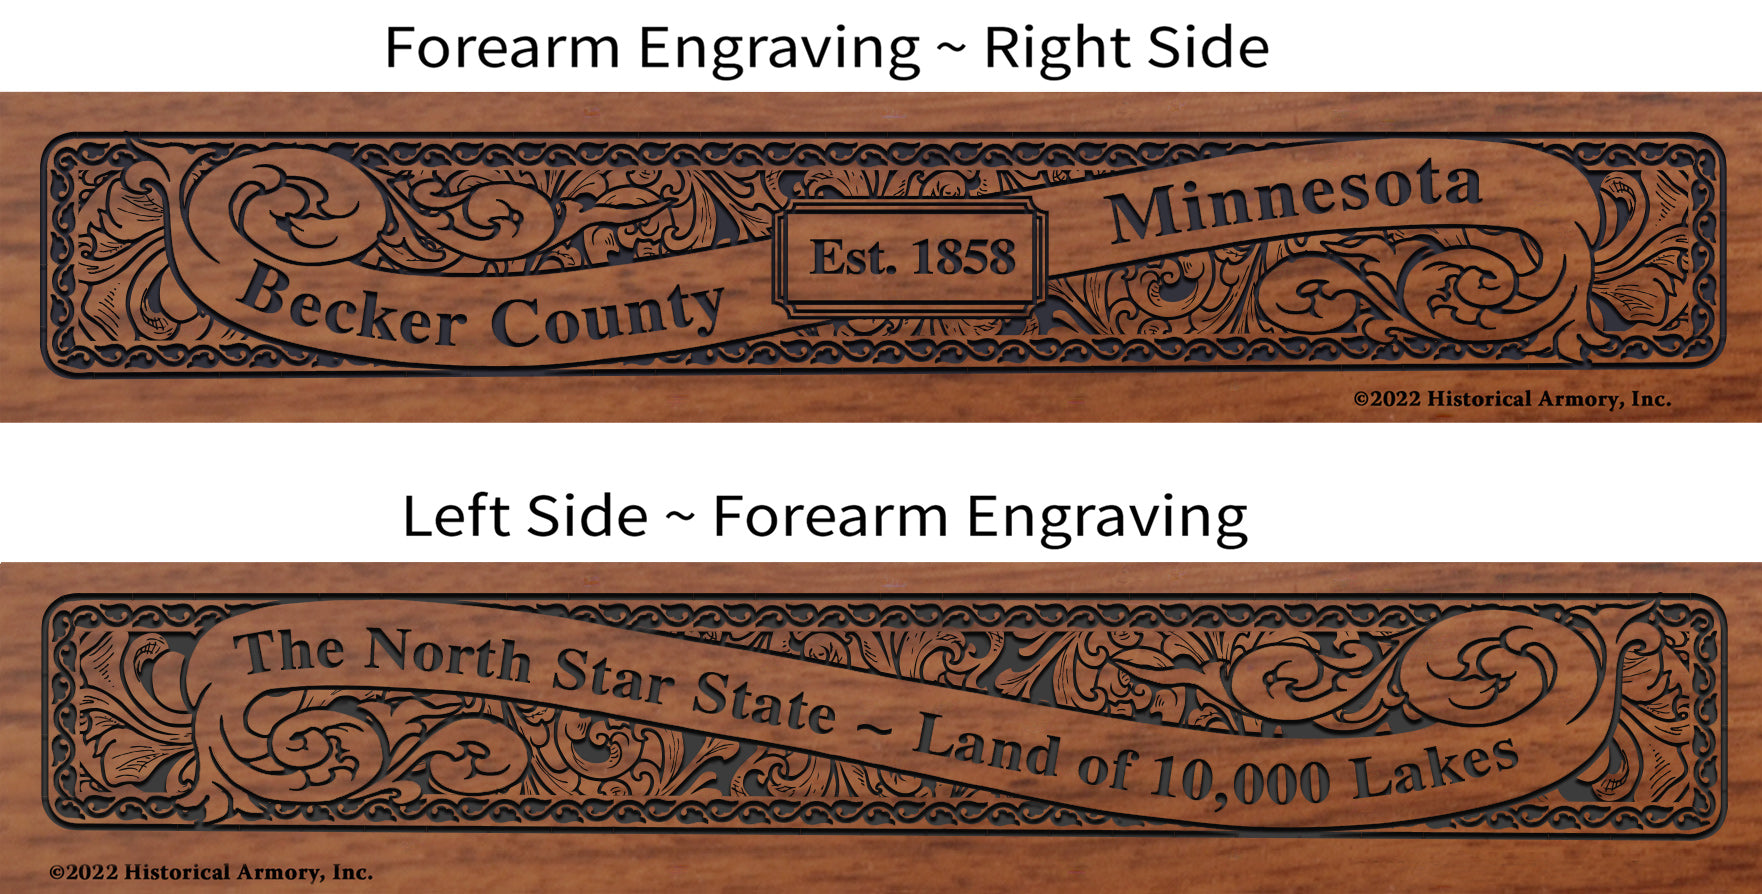 Becker County Minnesota Engraved Rifle Forearm